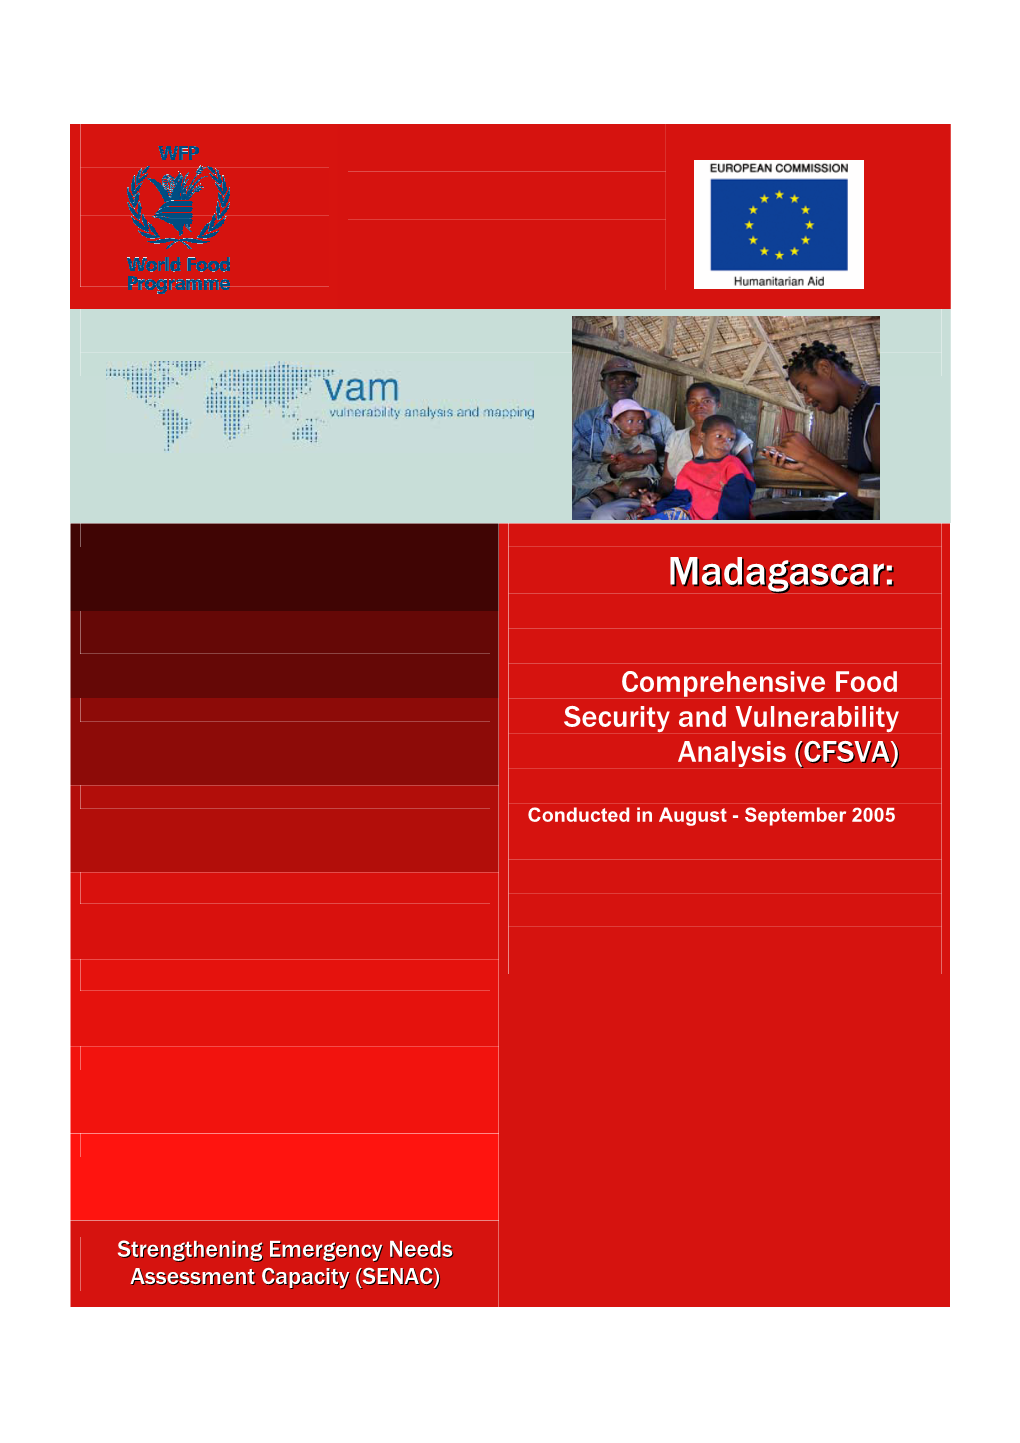 Madagascar: Comprehensive Food Security and Vulnerability Analysis (CFSVA)